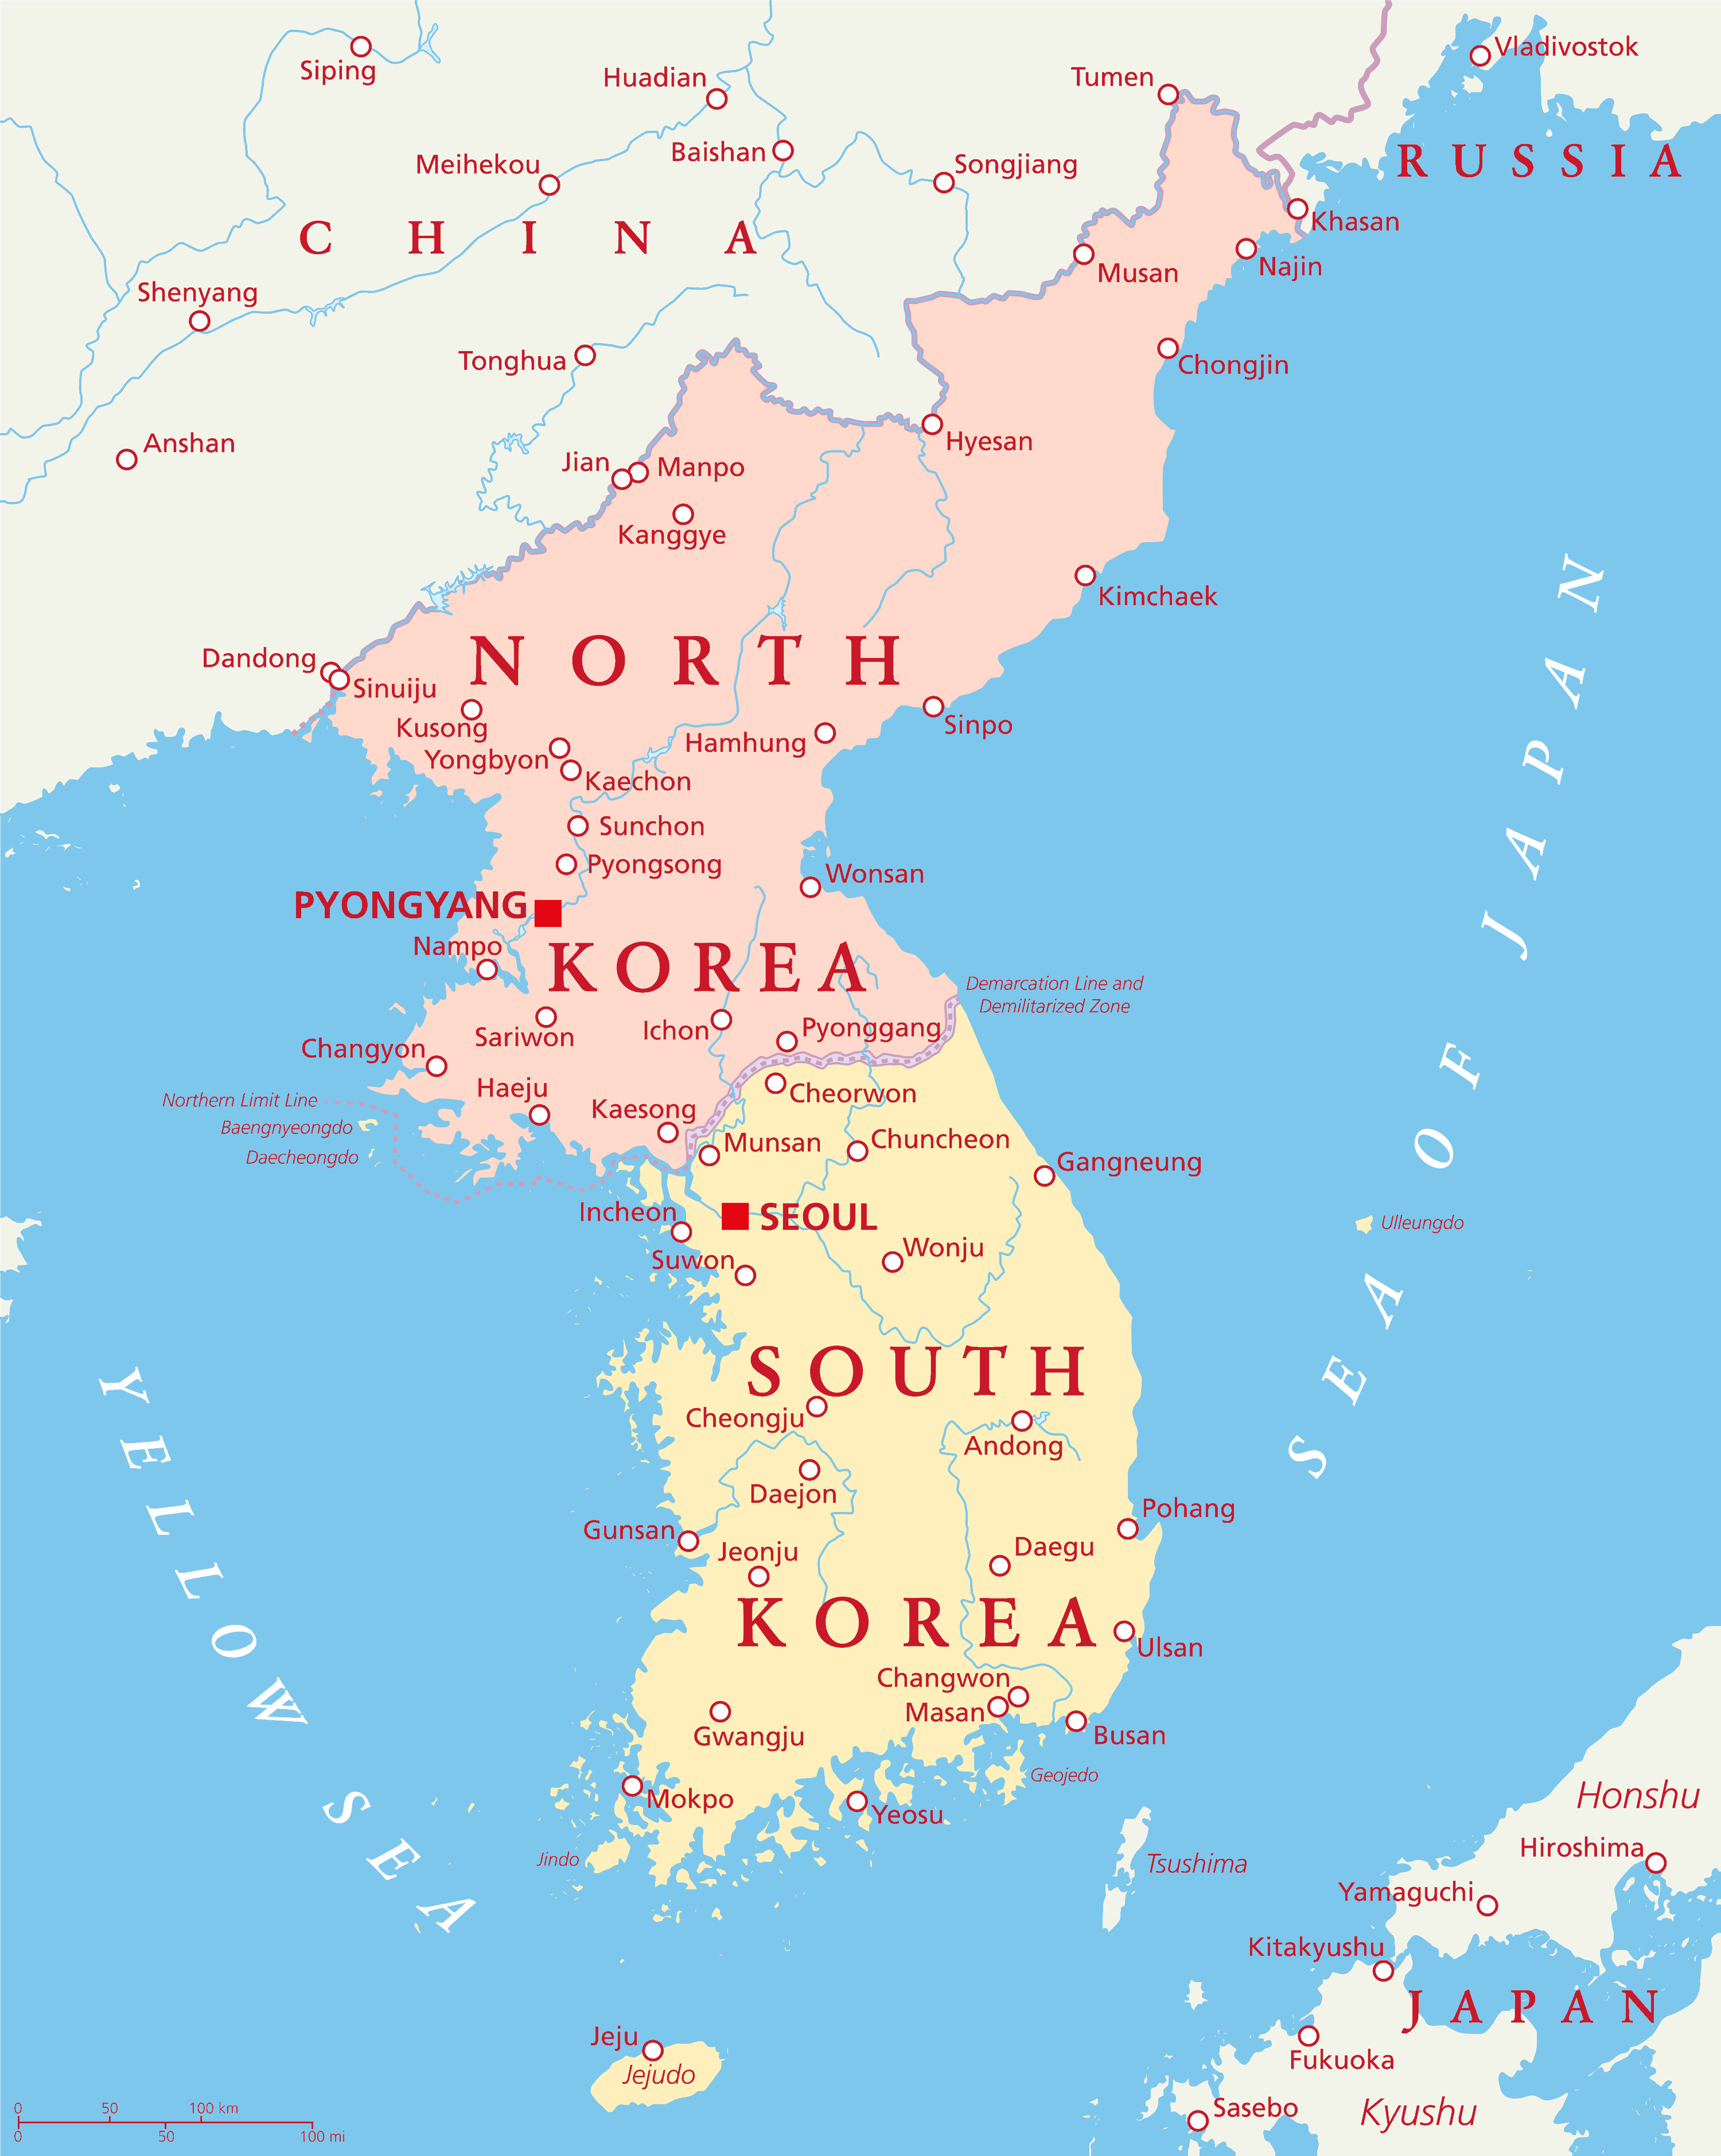 South Korea Political Map